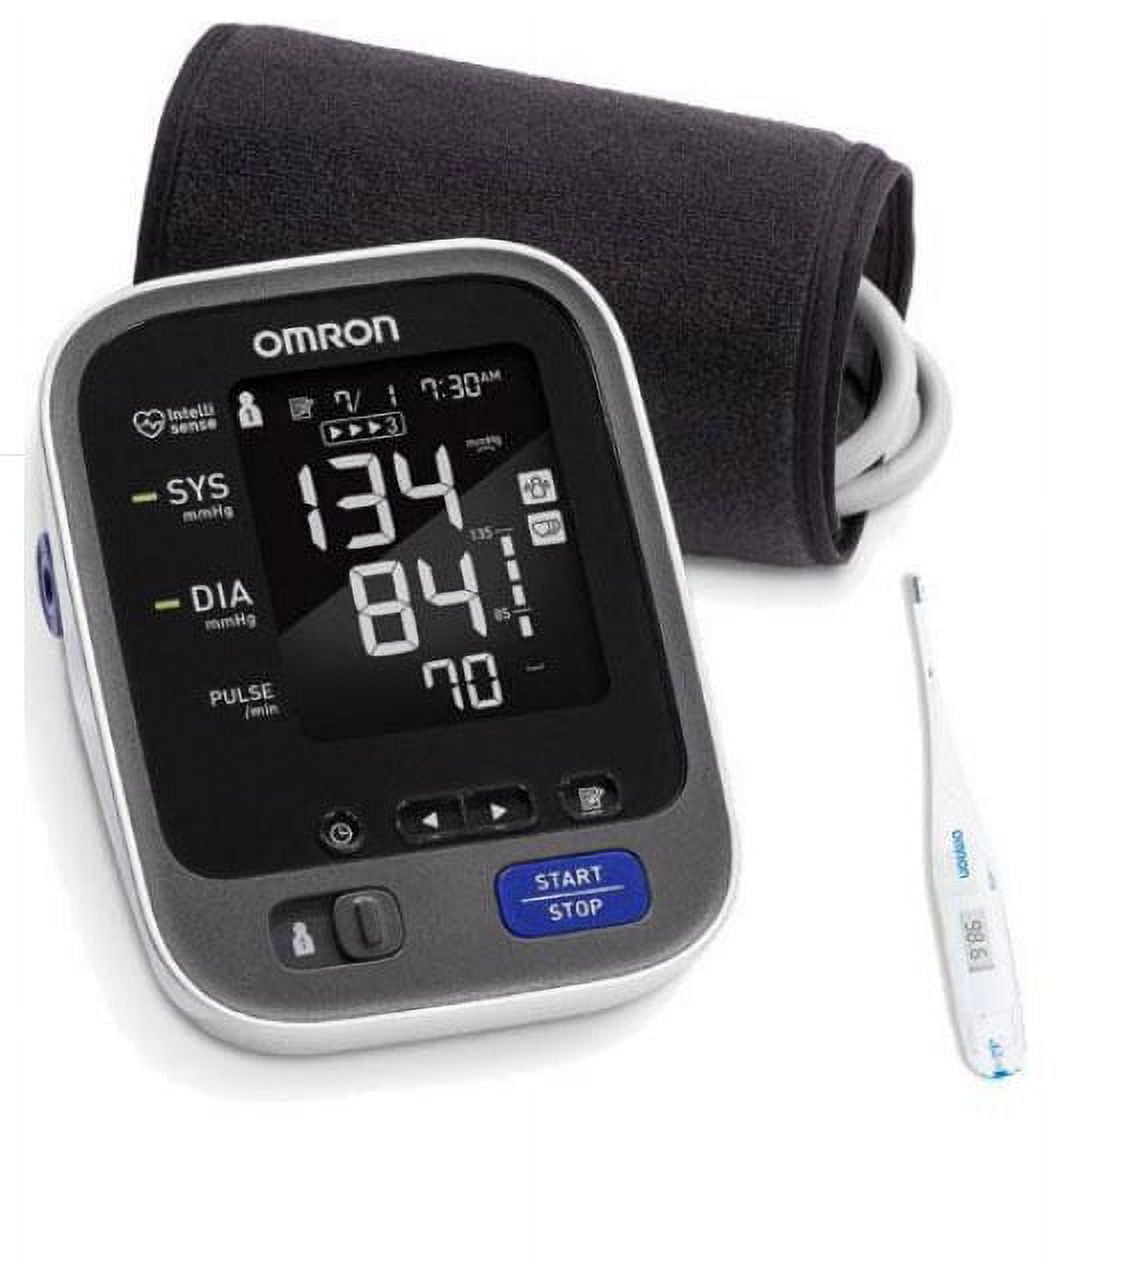 BOVKE Travel Case for Omron 10 Series BP786 Blood Pressure Monitor